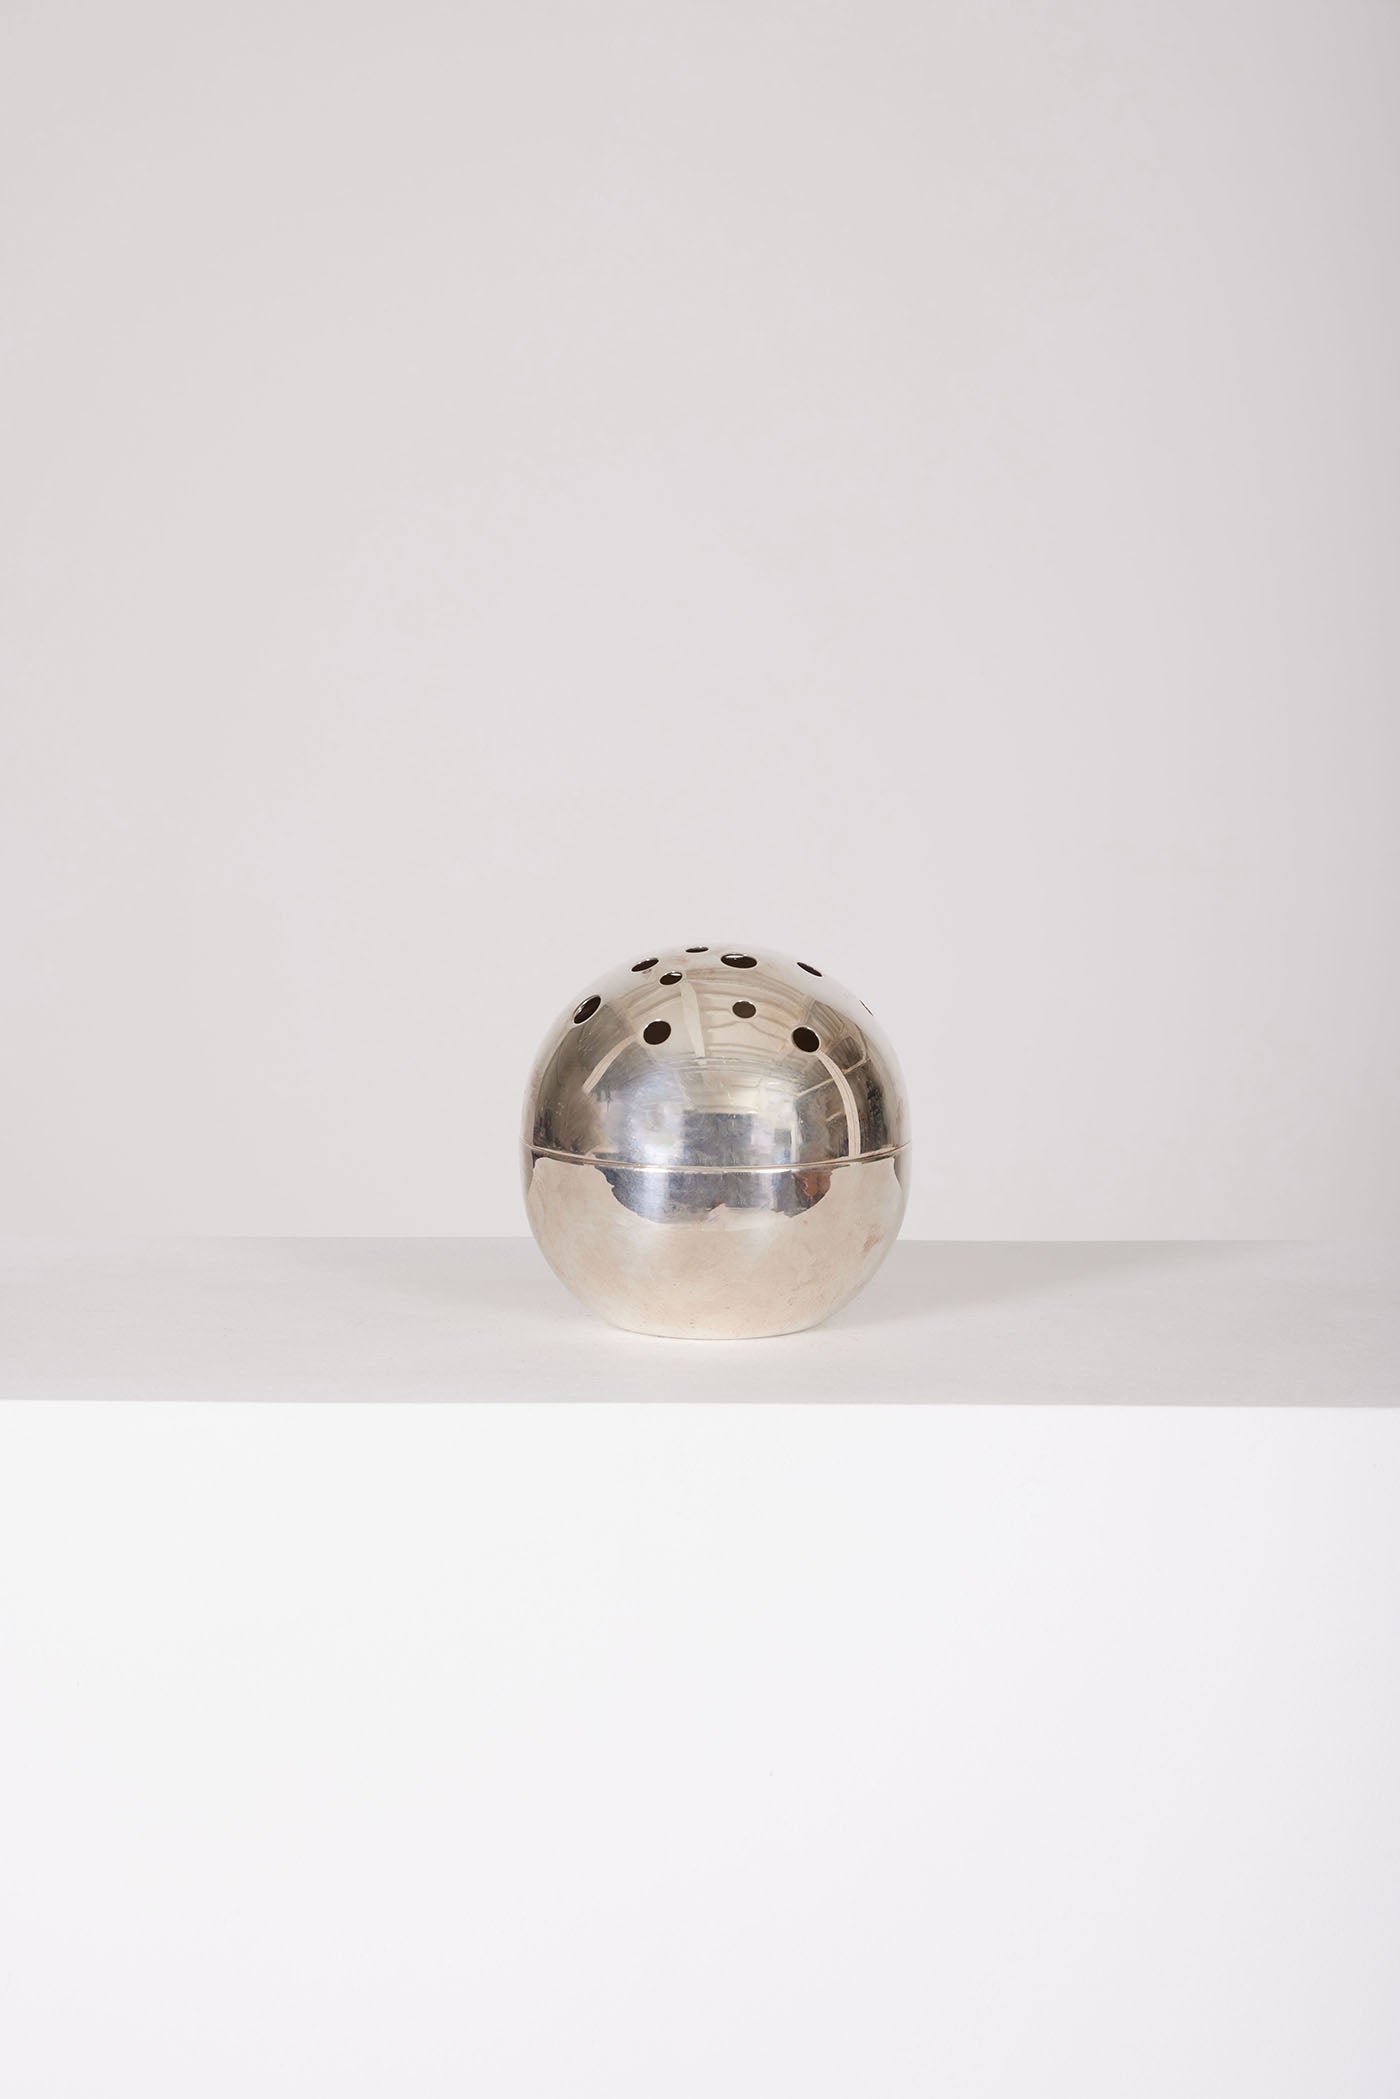 Flower spike ball by Lino Sabbatini